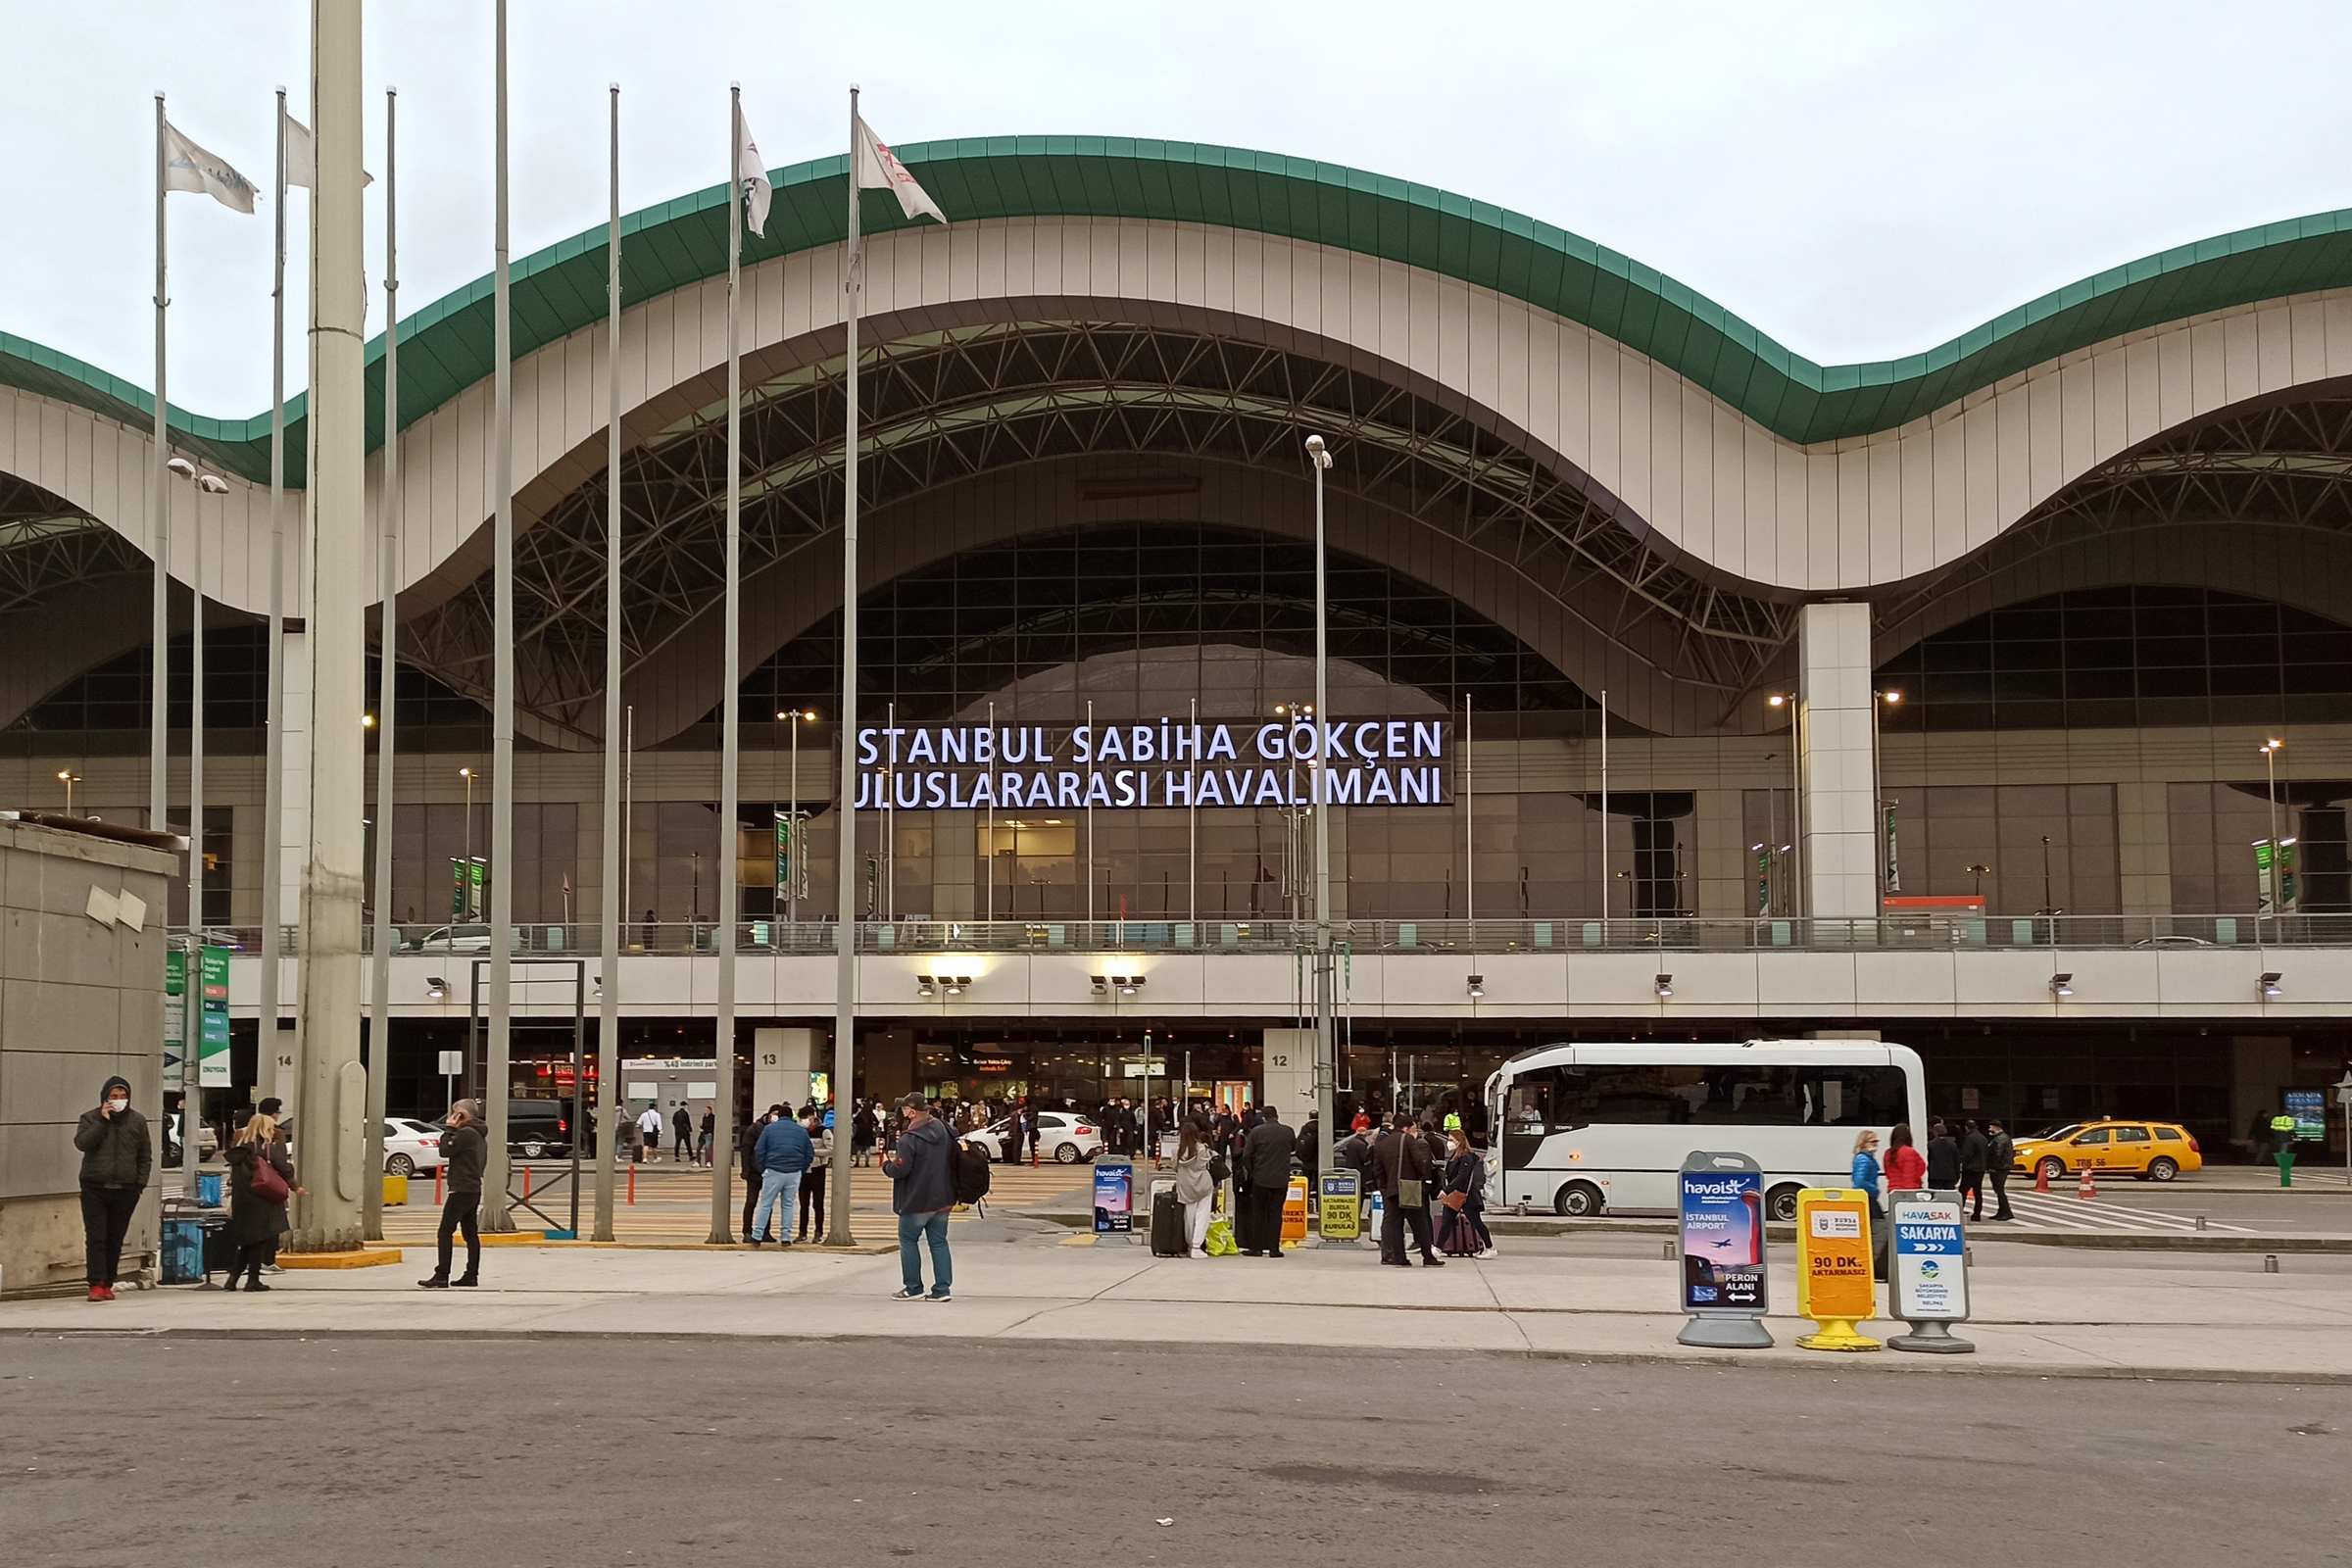 Аэропорт имени Сабихи Гёкчен (Sabiha Gökçen Uluslararası Havalimanı) в Стамбуле